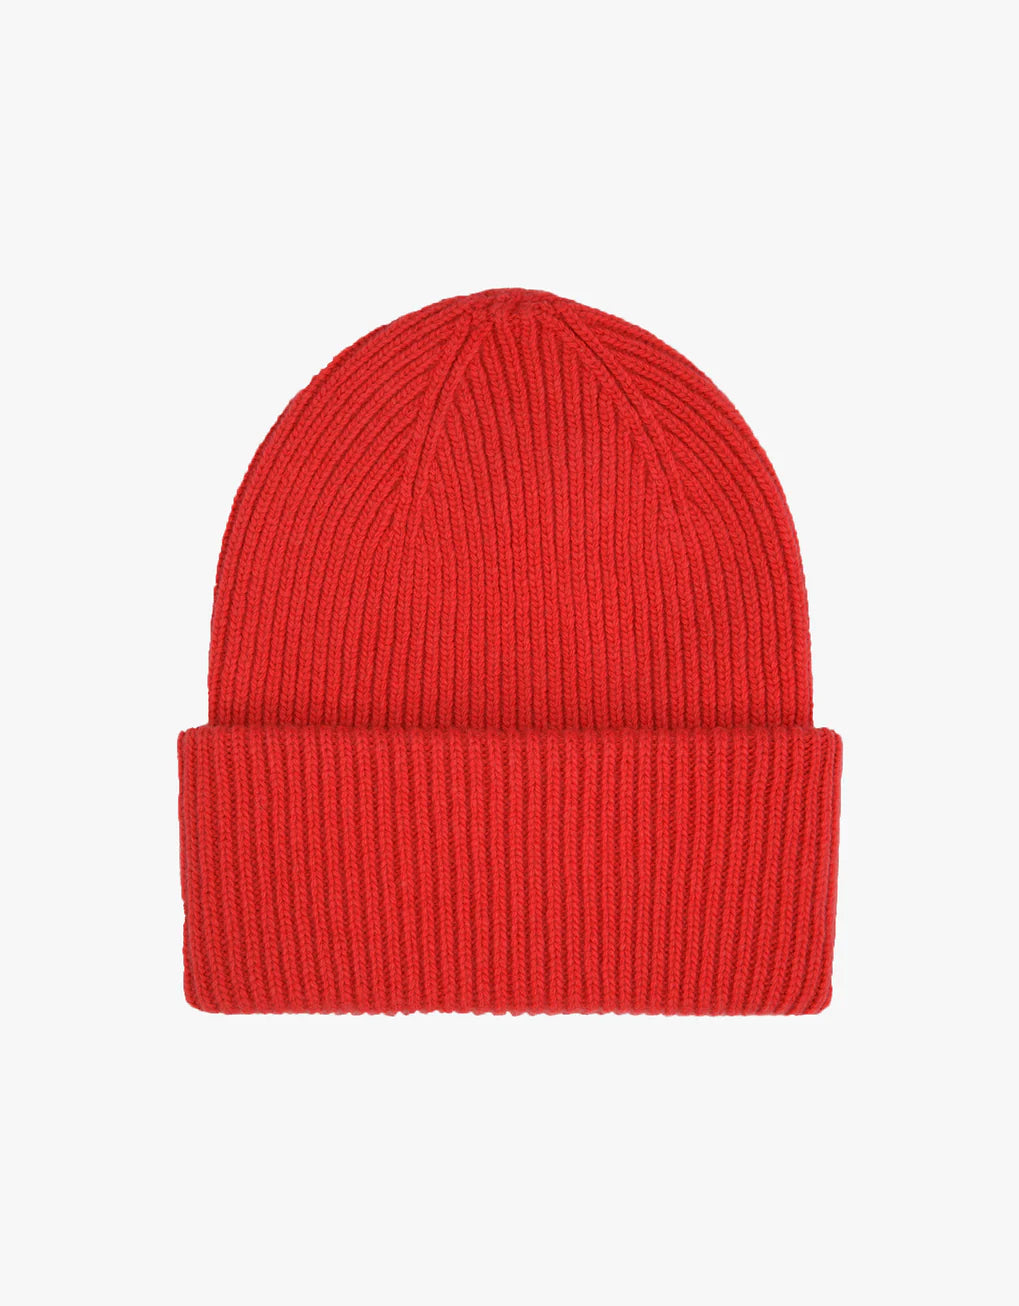 Merono Wool Hat Scarlet Red